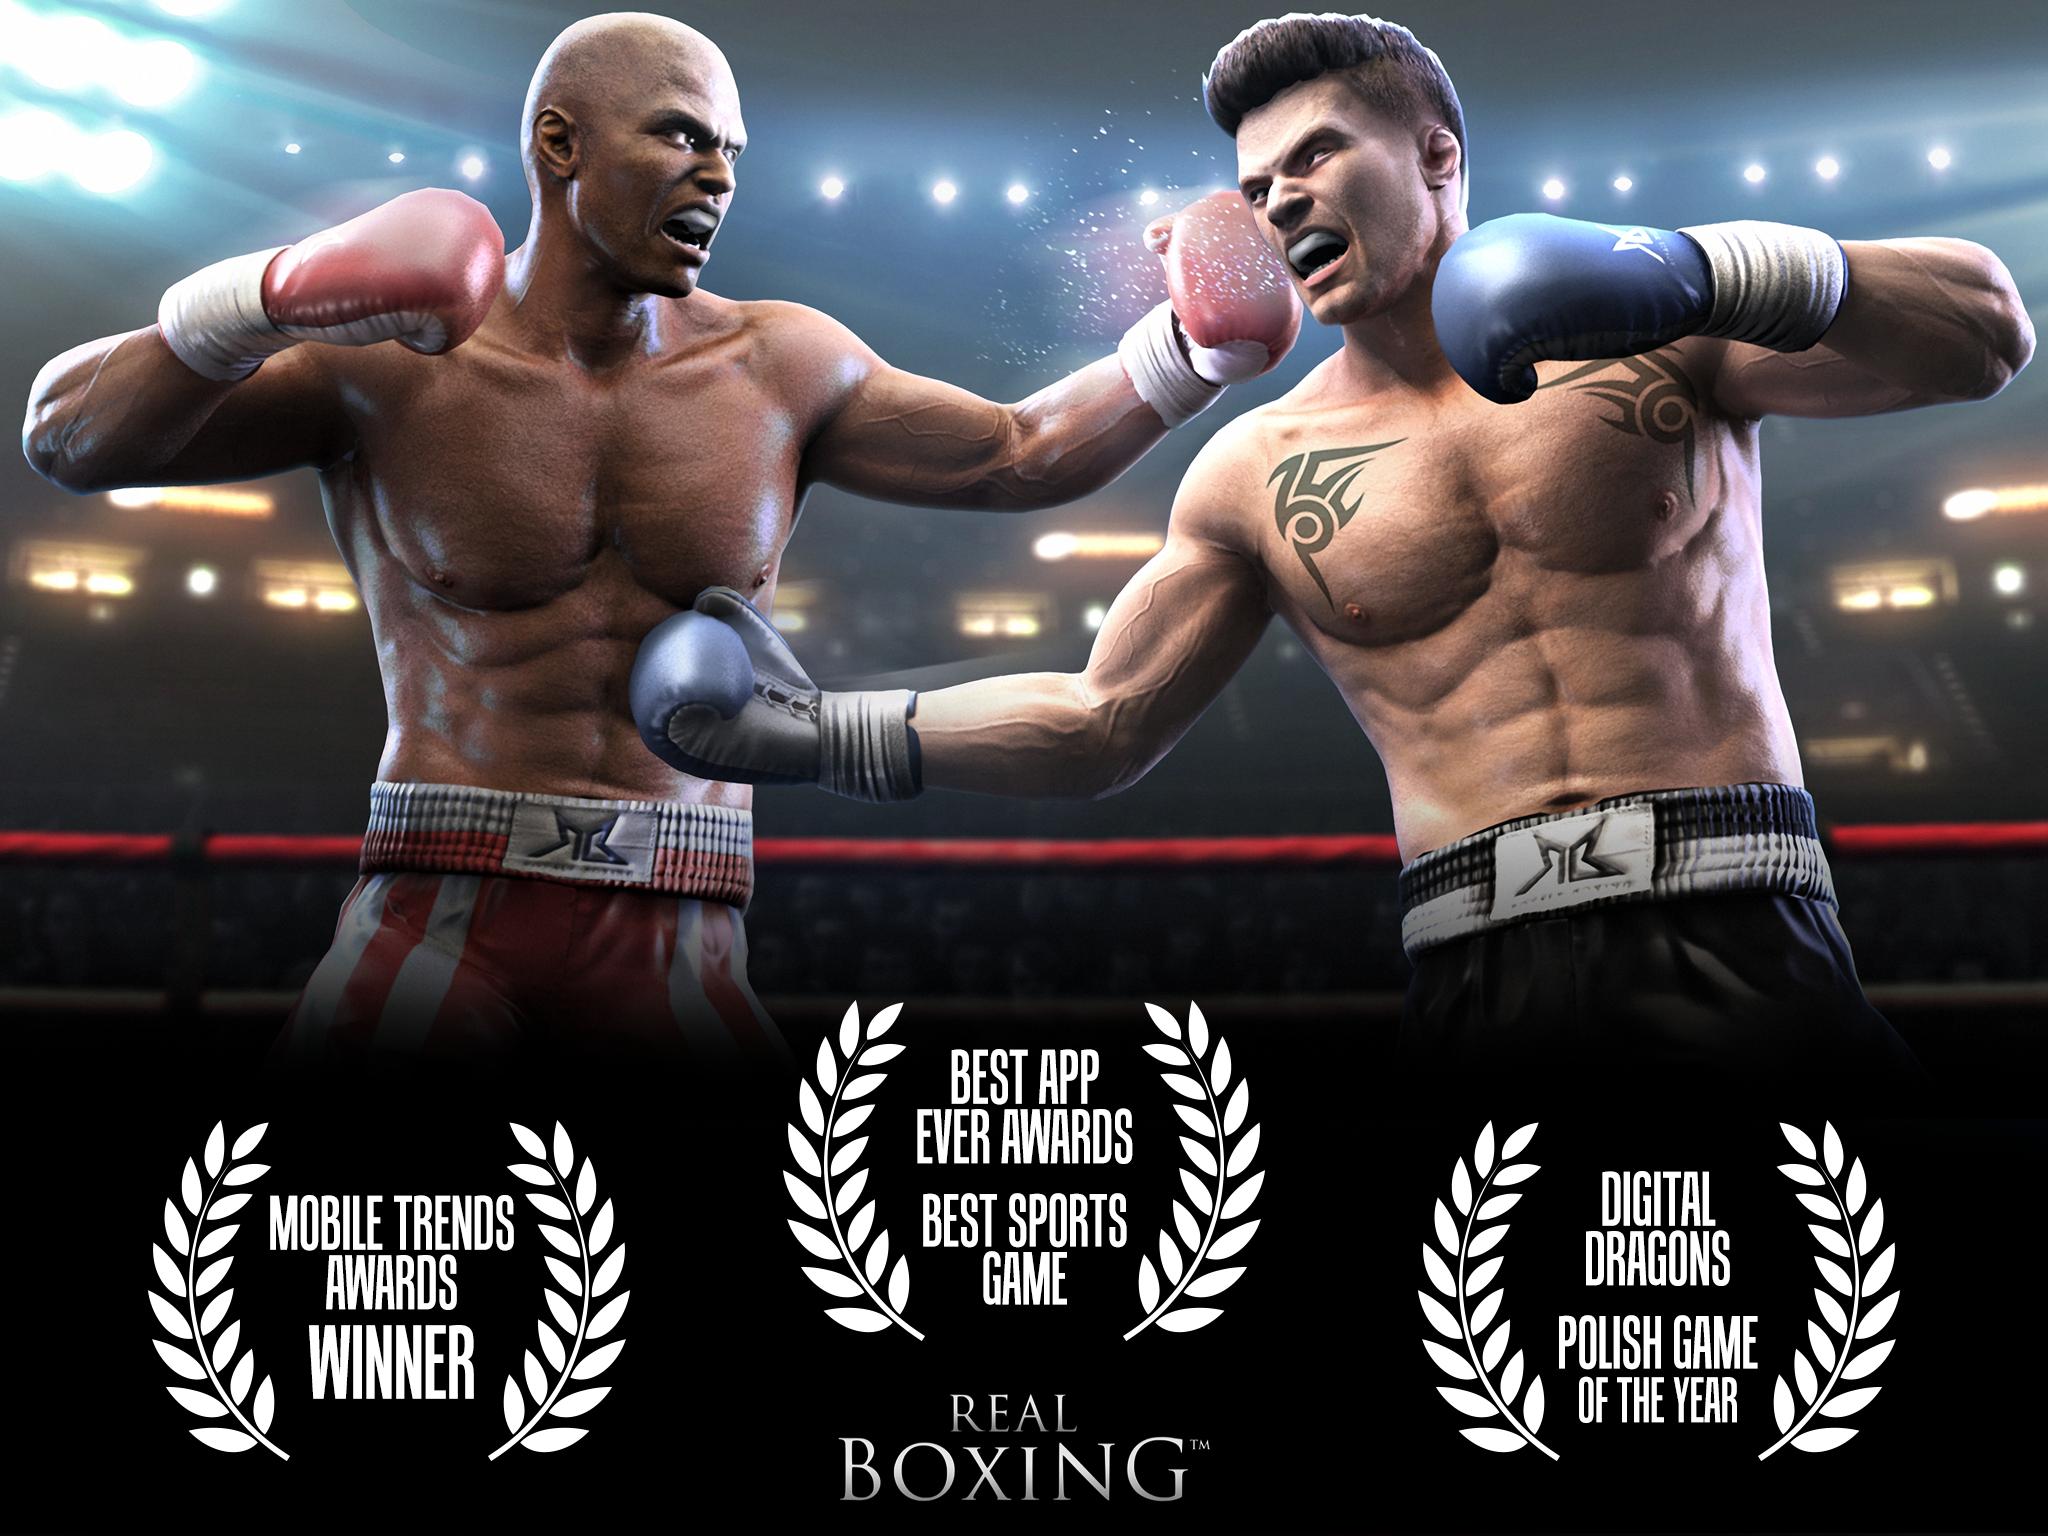 Real Boxing – Fighting Game 2.6.1 Screenshot 15